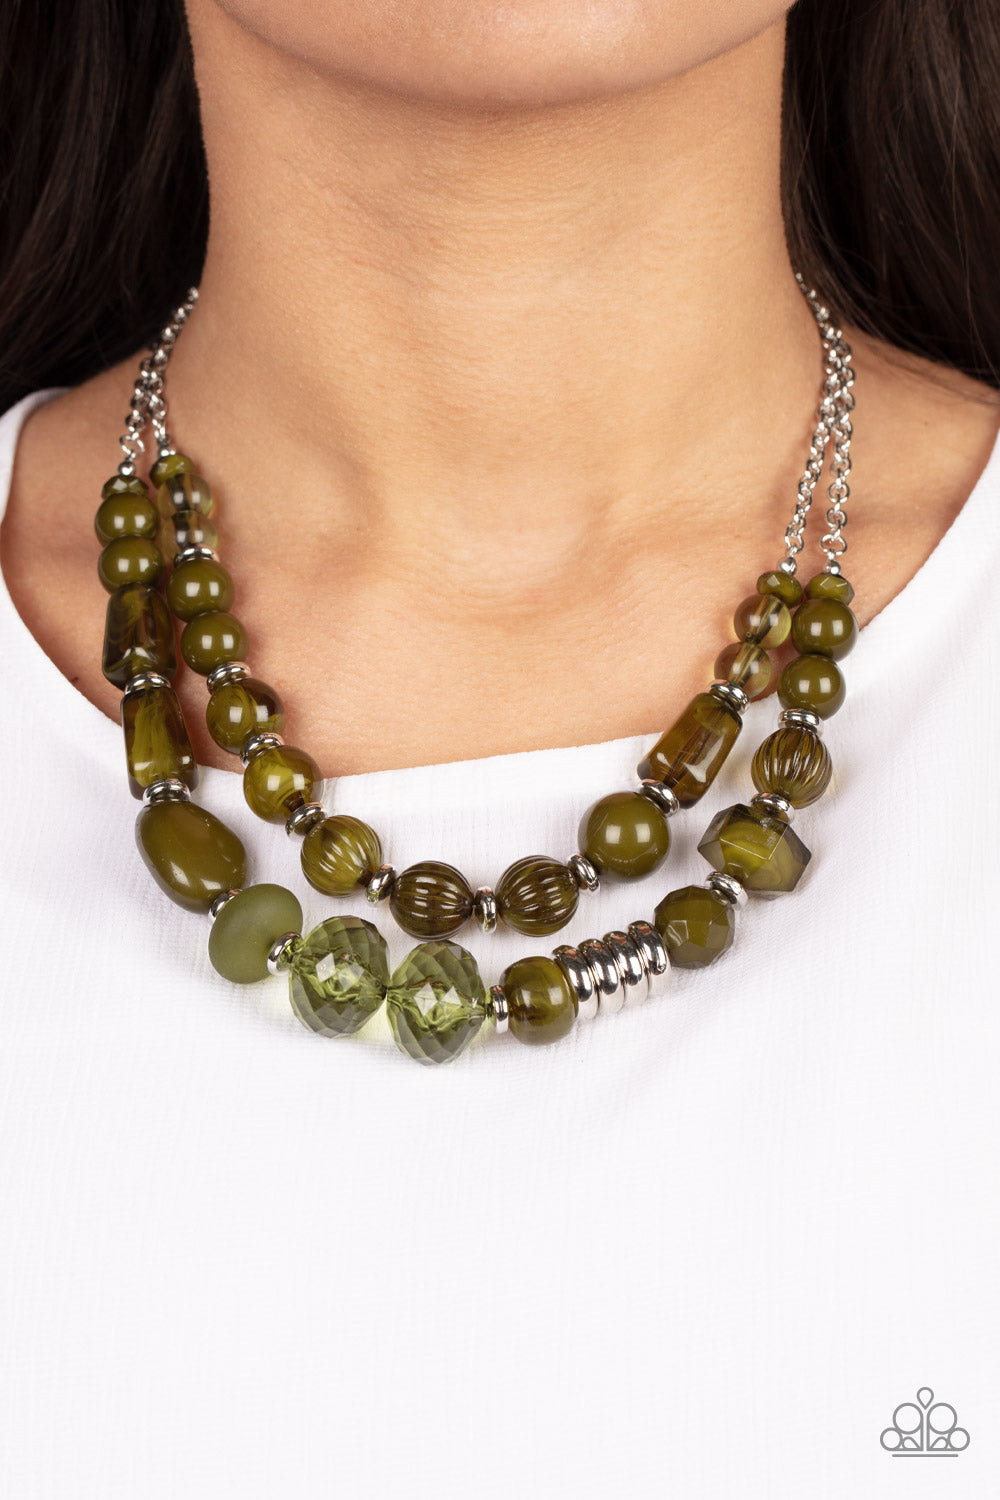 Paparazzi Accessories - Pina Colada Paradise - Green Necklace